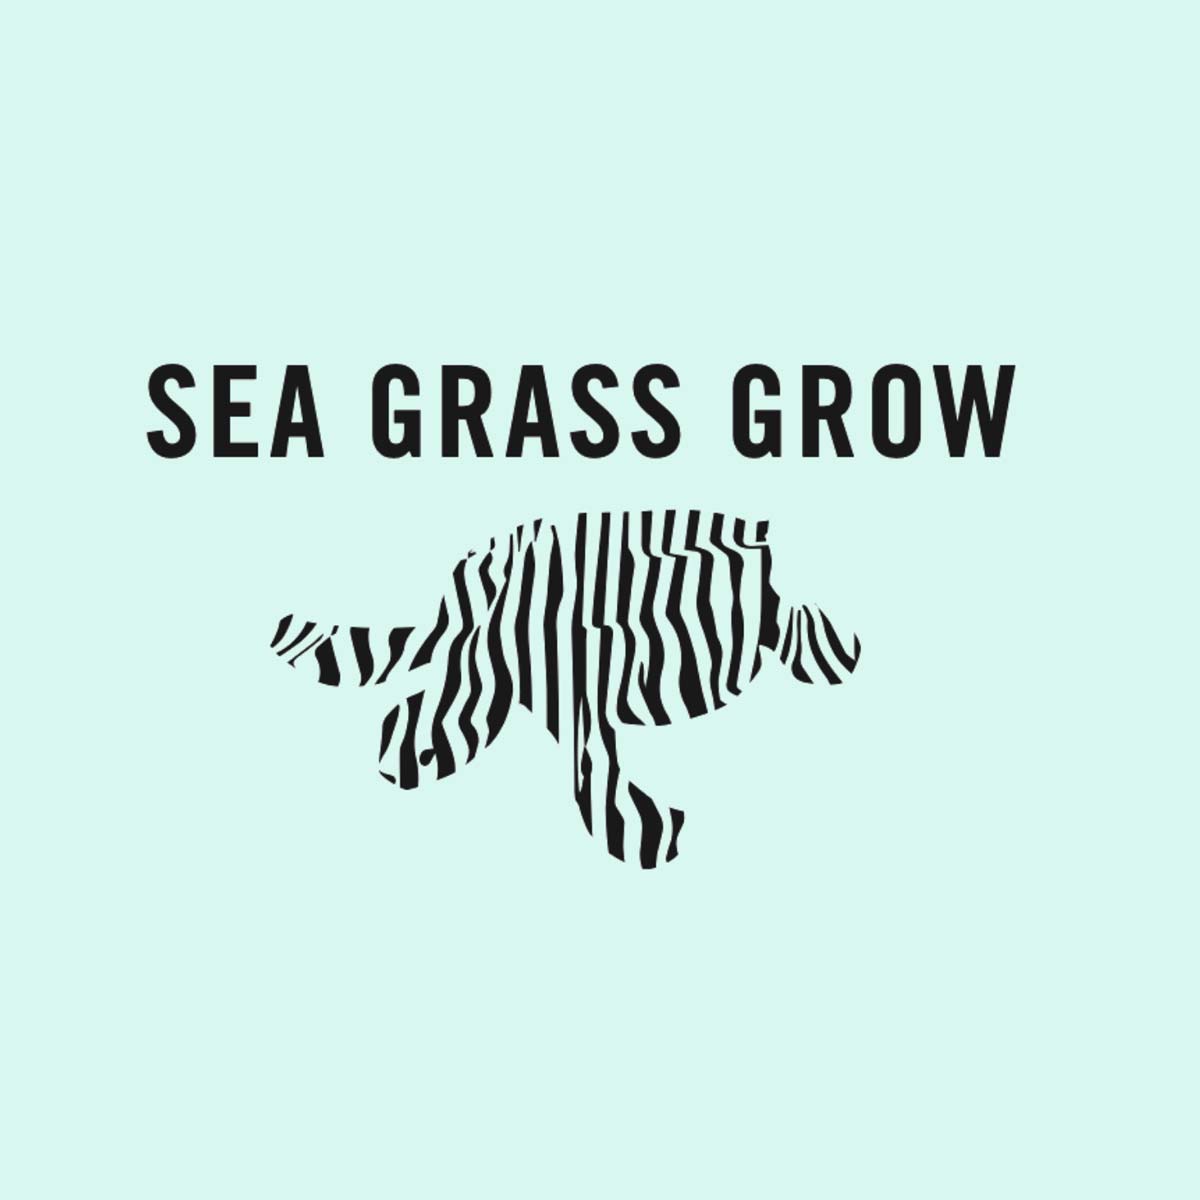 SeaGrass grow logo mockup.